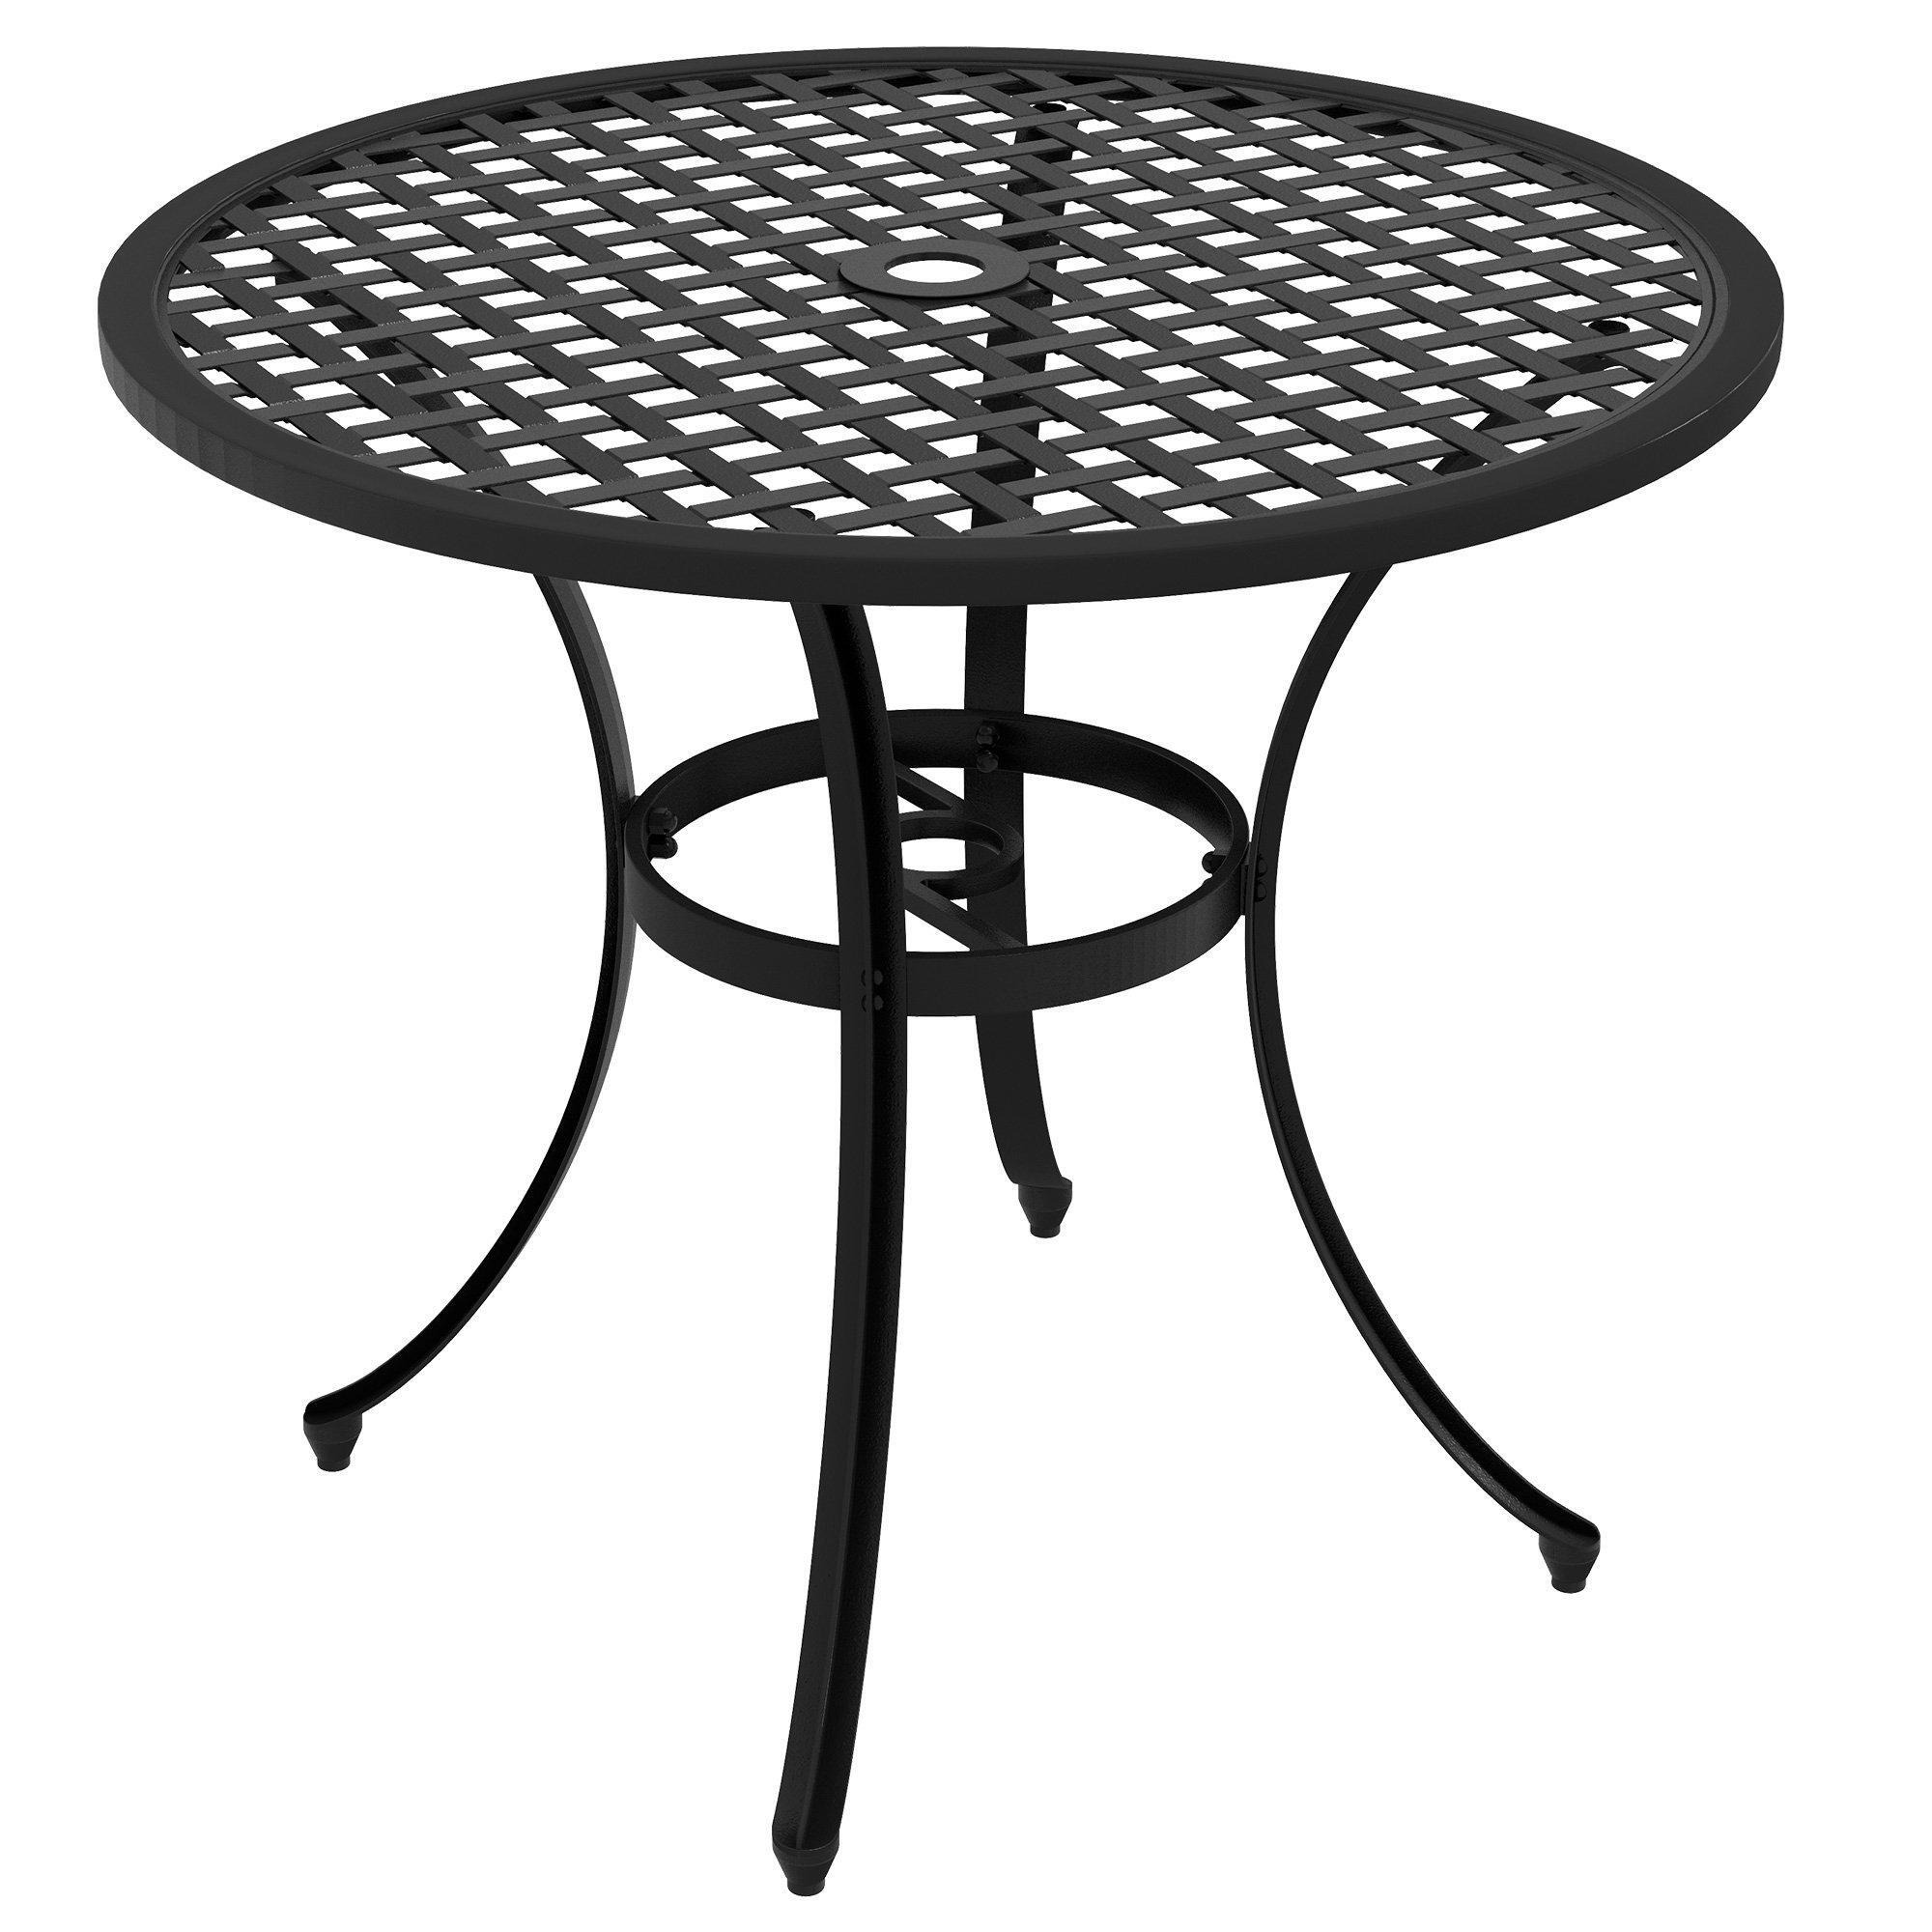 Cast Aluminium Bistro Table with Umbrella Hole for Balcony - image 1